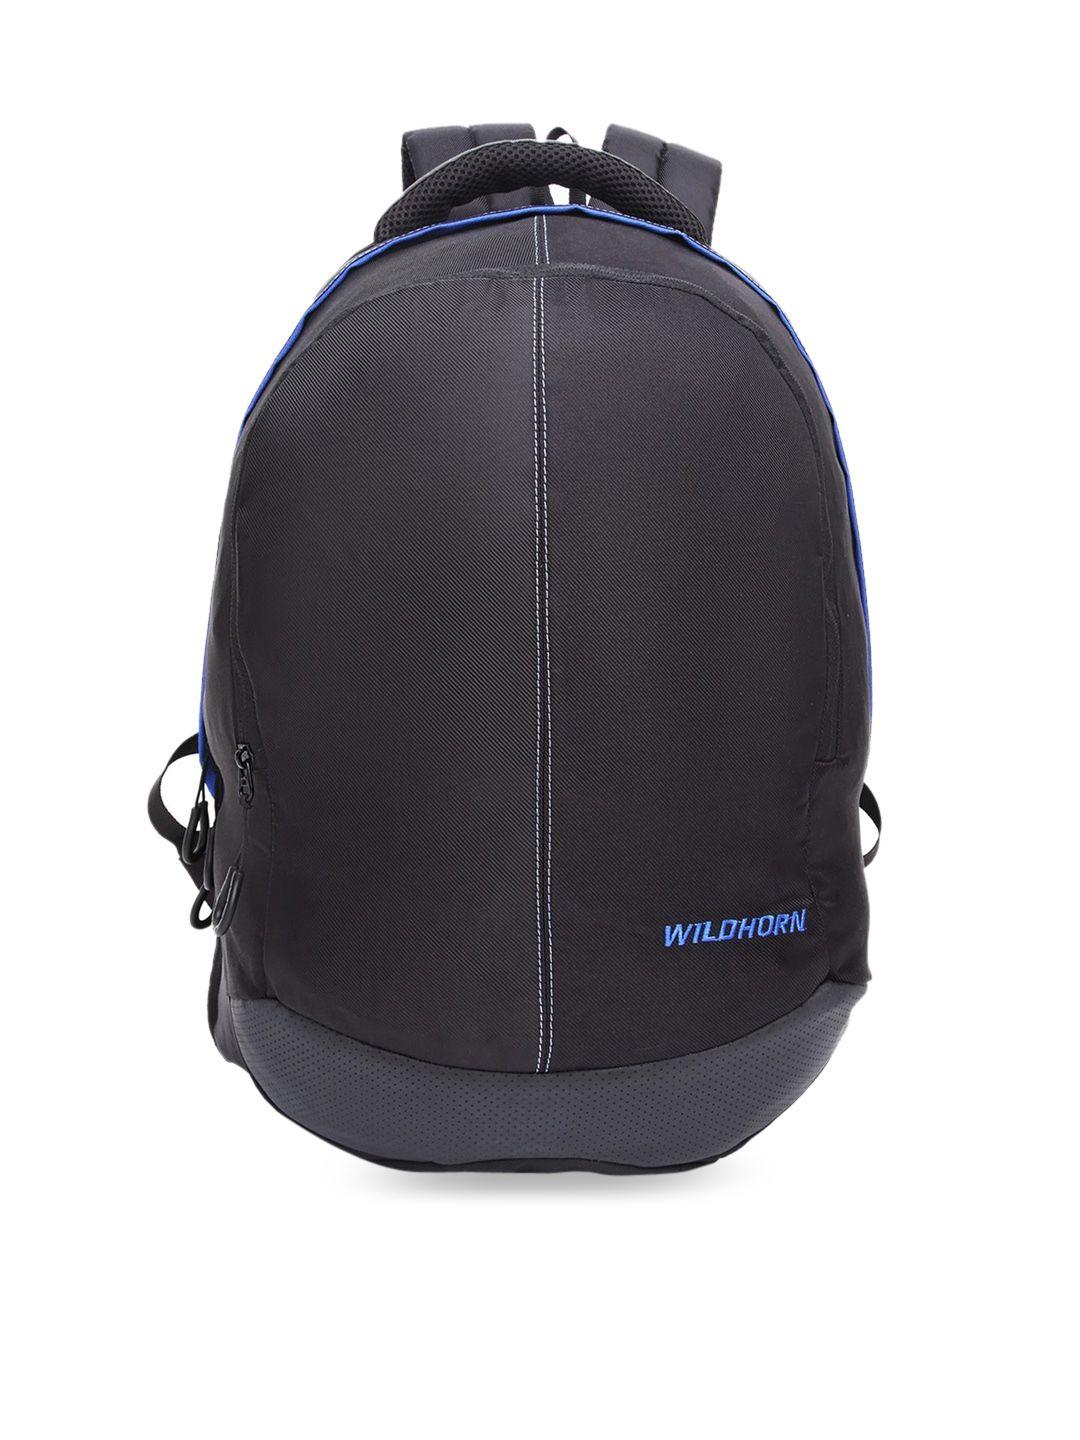 wildhorn unisex black & blue backpack with compression straps